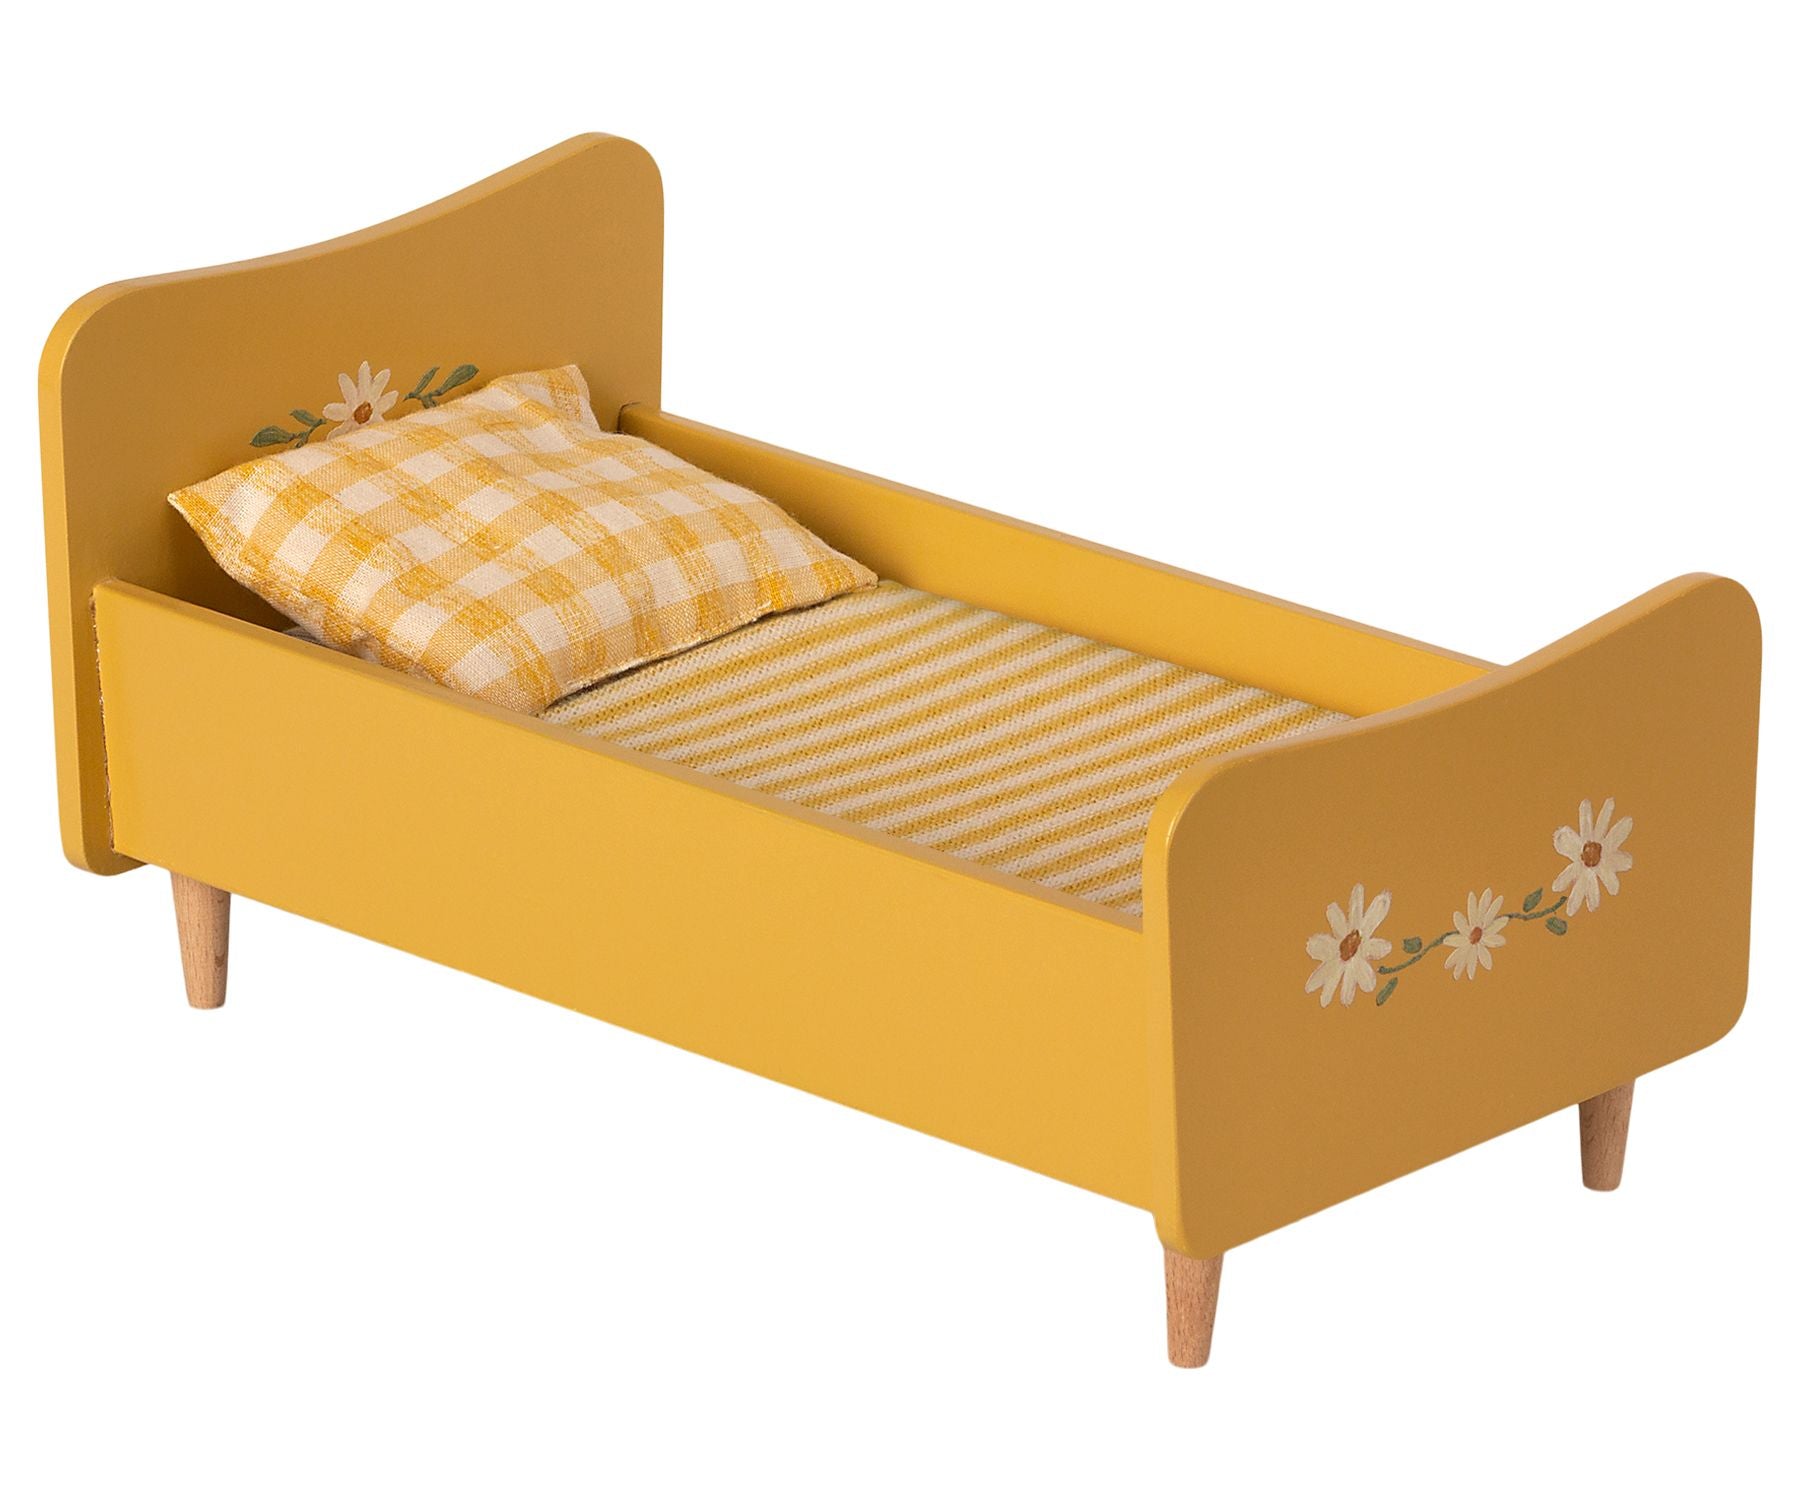 Maileg Yellow Mini Wooden Bed